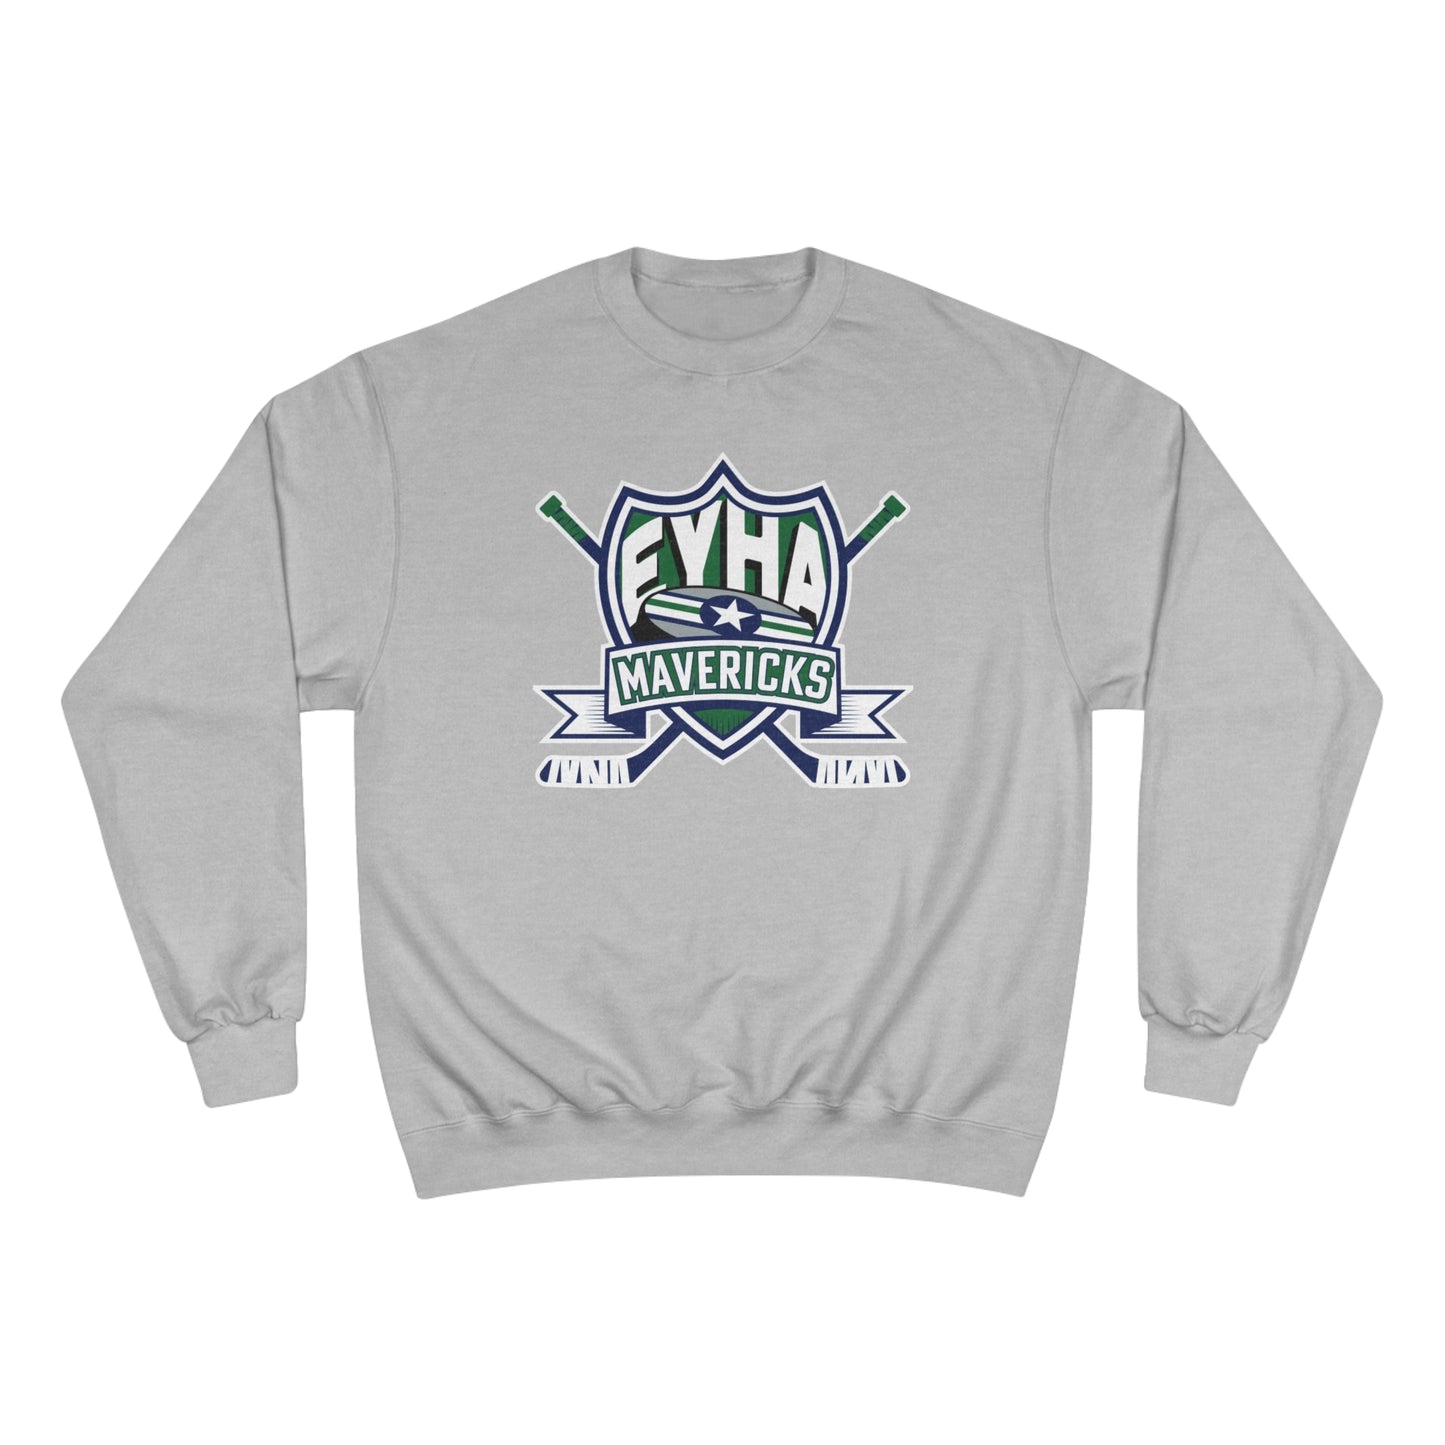 Champion Crew Sweatshirt | EYHA Mavericks